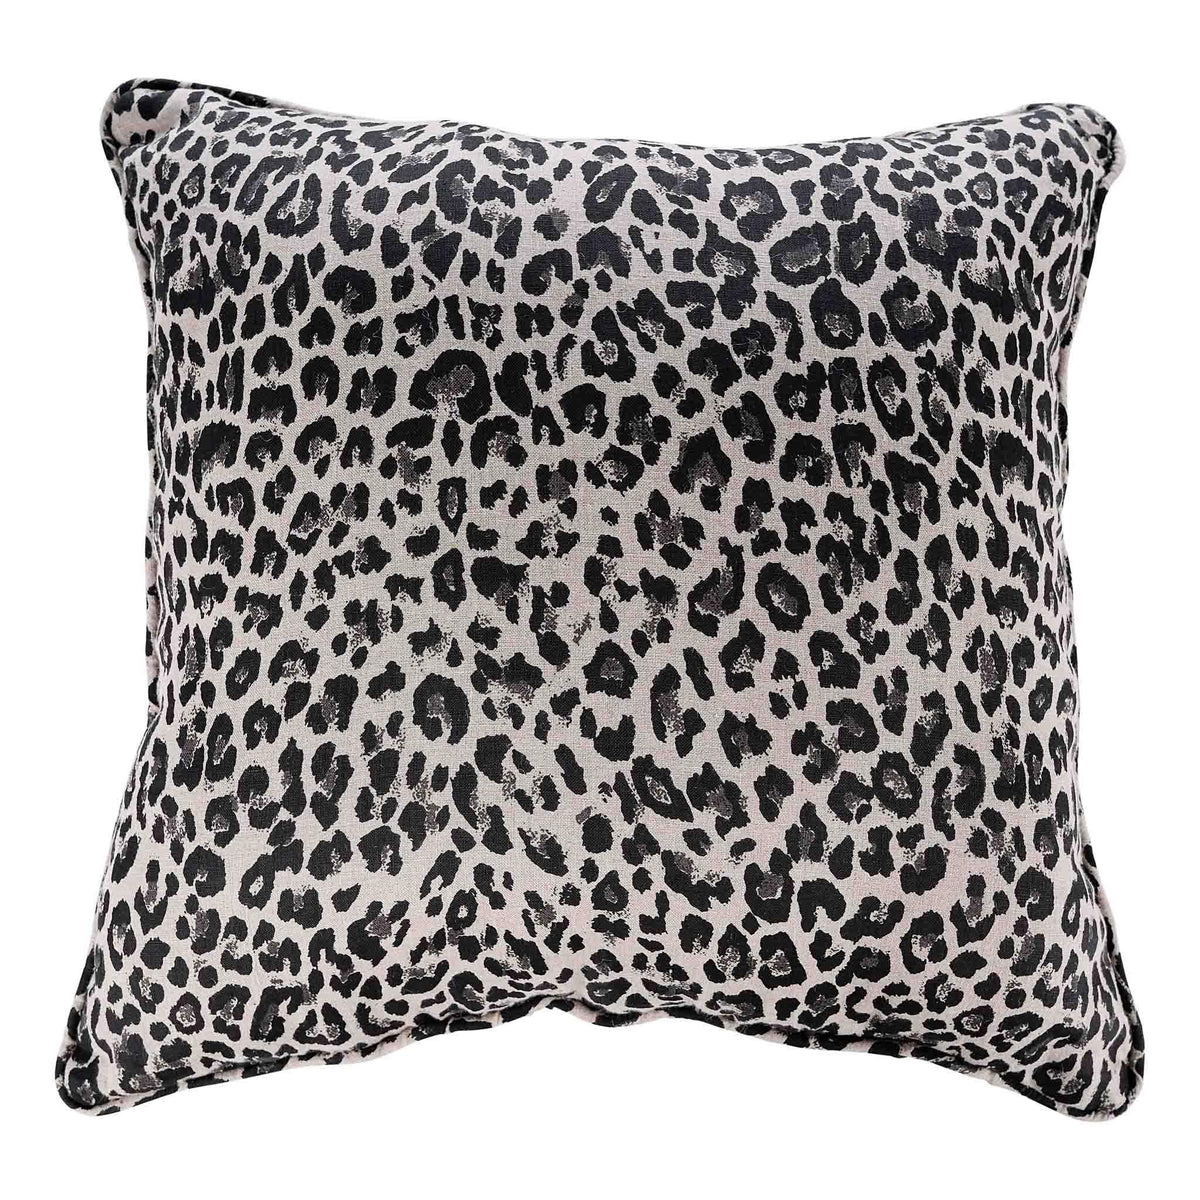 Texas Cheetah Pillow - GLORY HAUS 